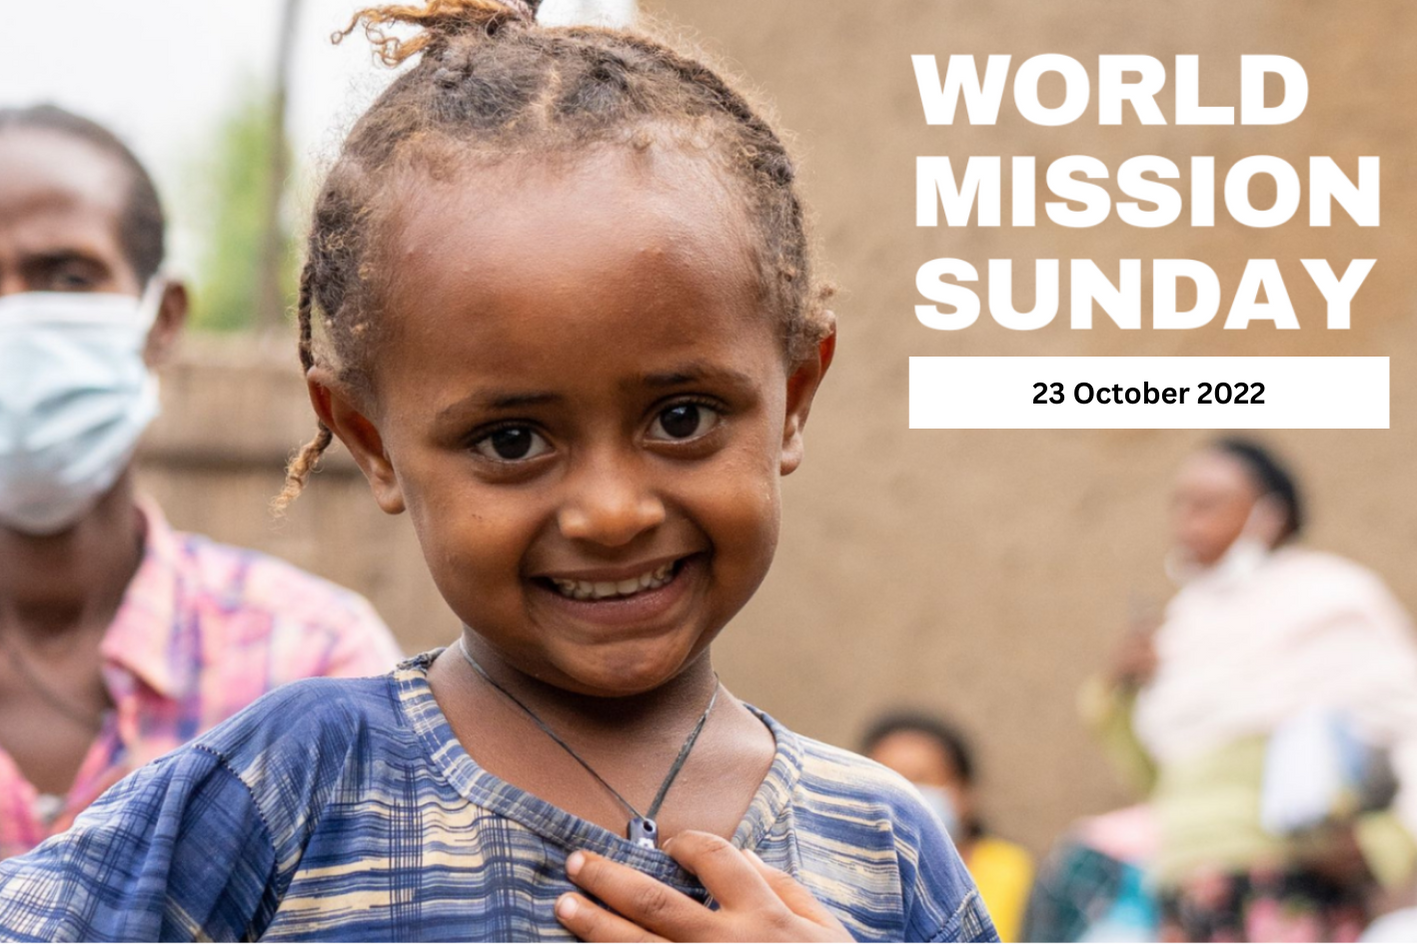 World Mission Sunday